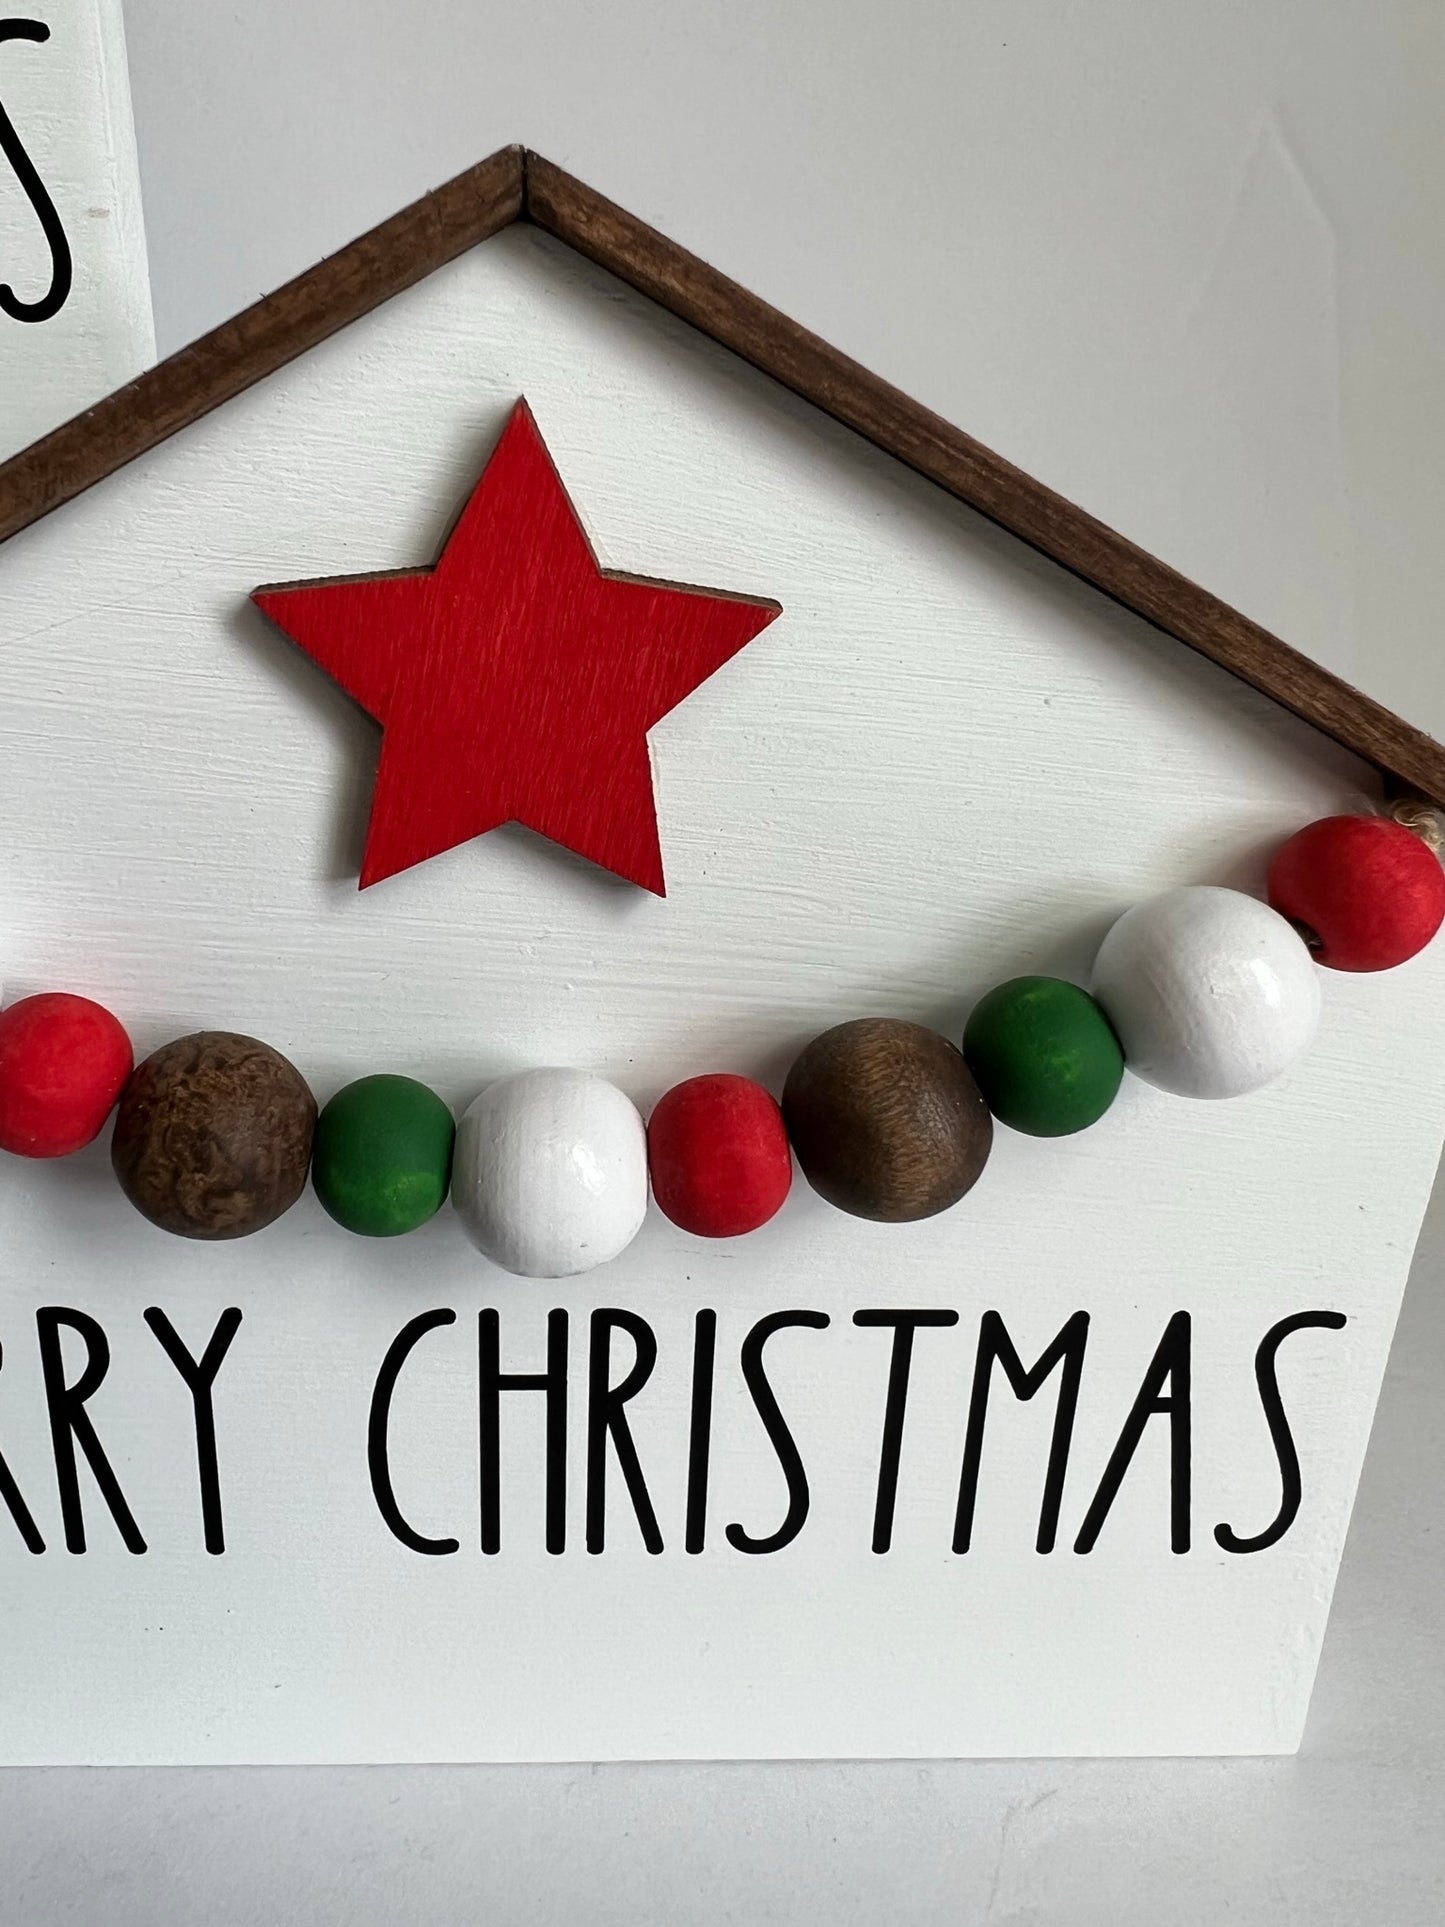 Merry Christmas House Shape Sign